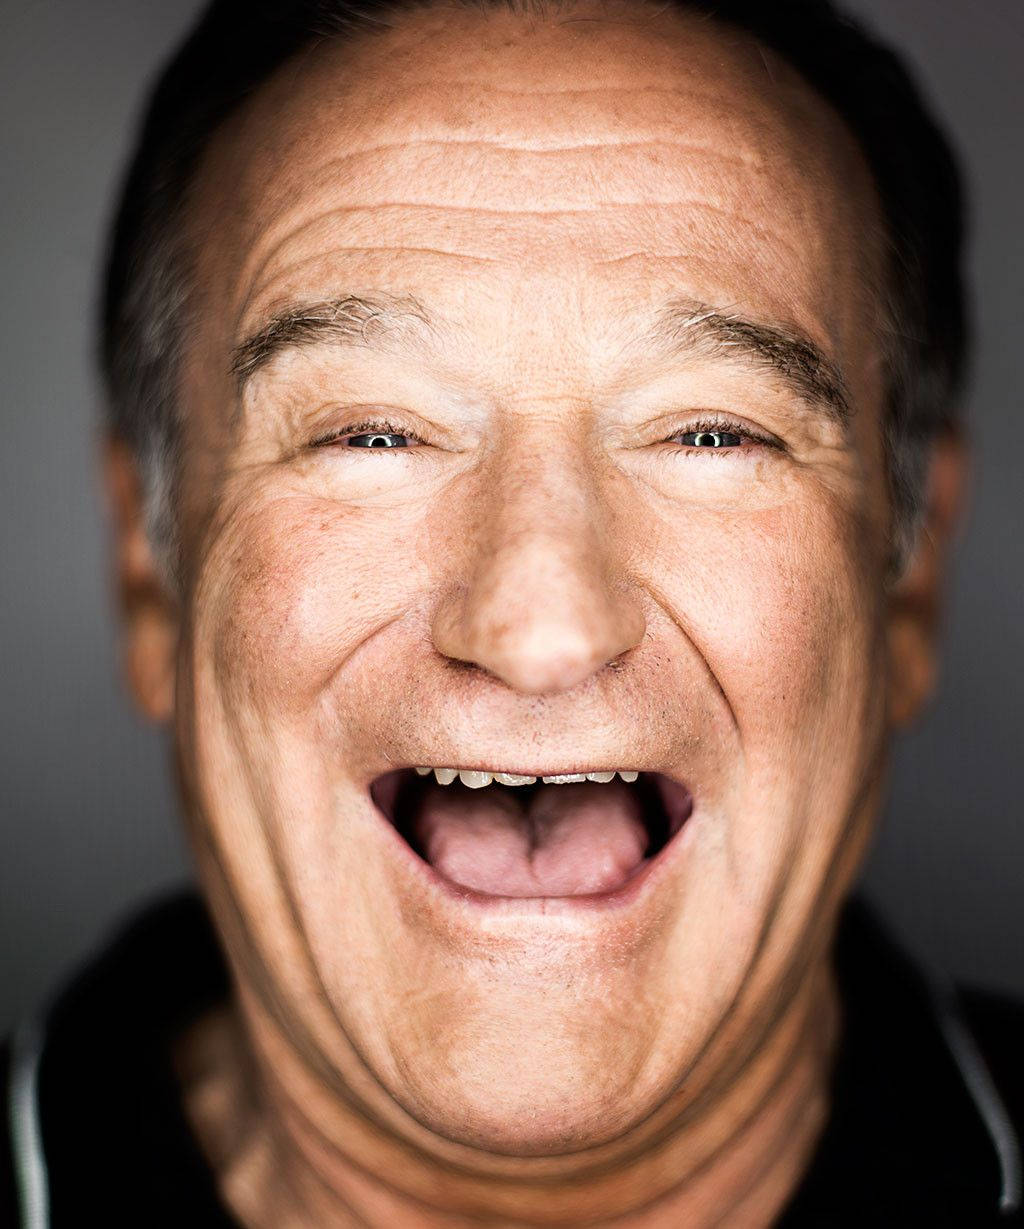 Free Robin Williams Wallpaper Downloads, [100+] Robin Williams Wallpapers  for FREE 